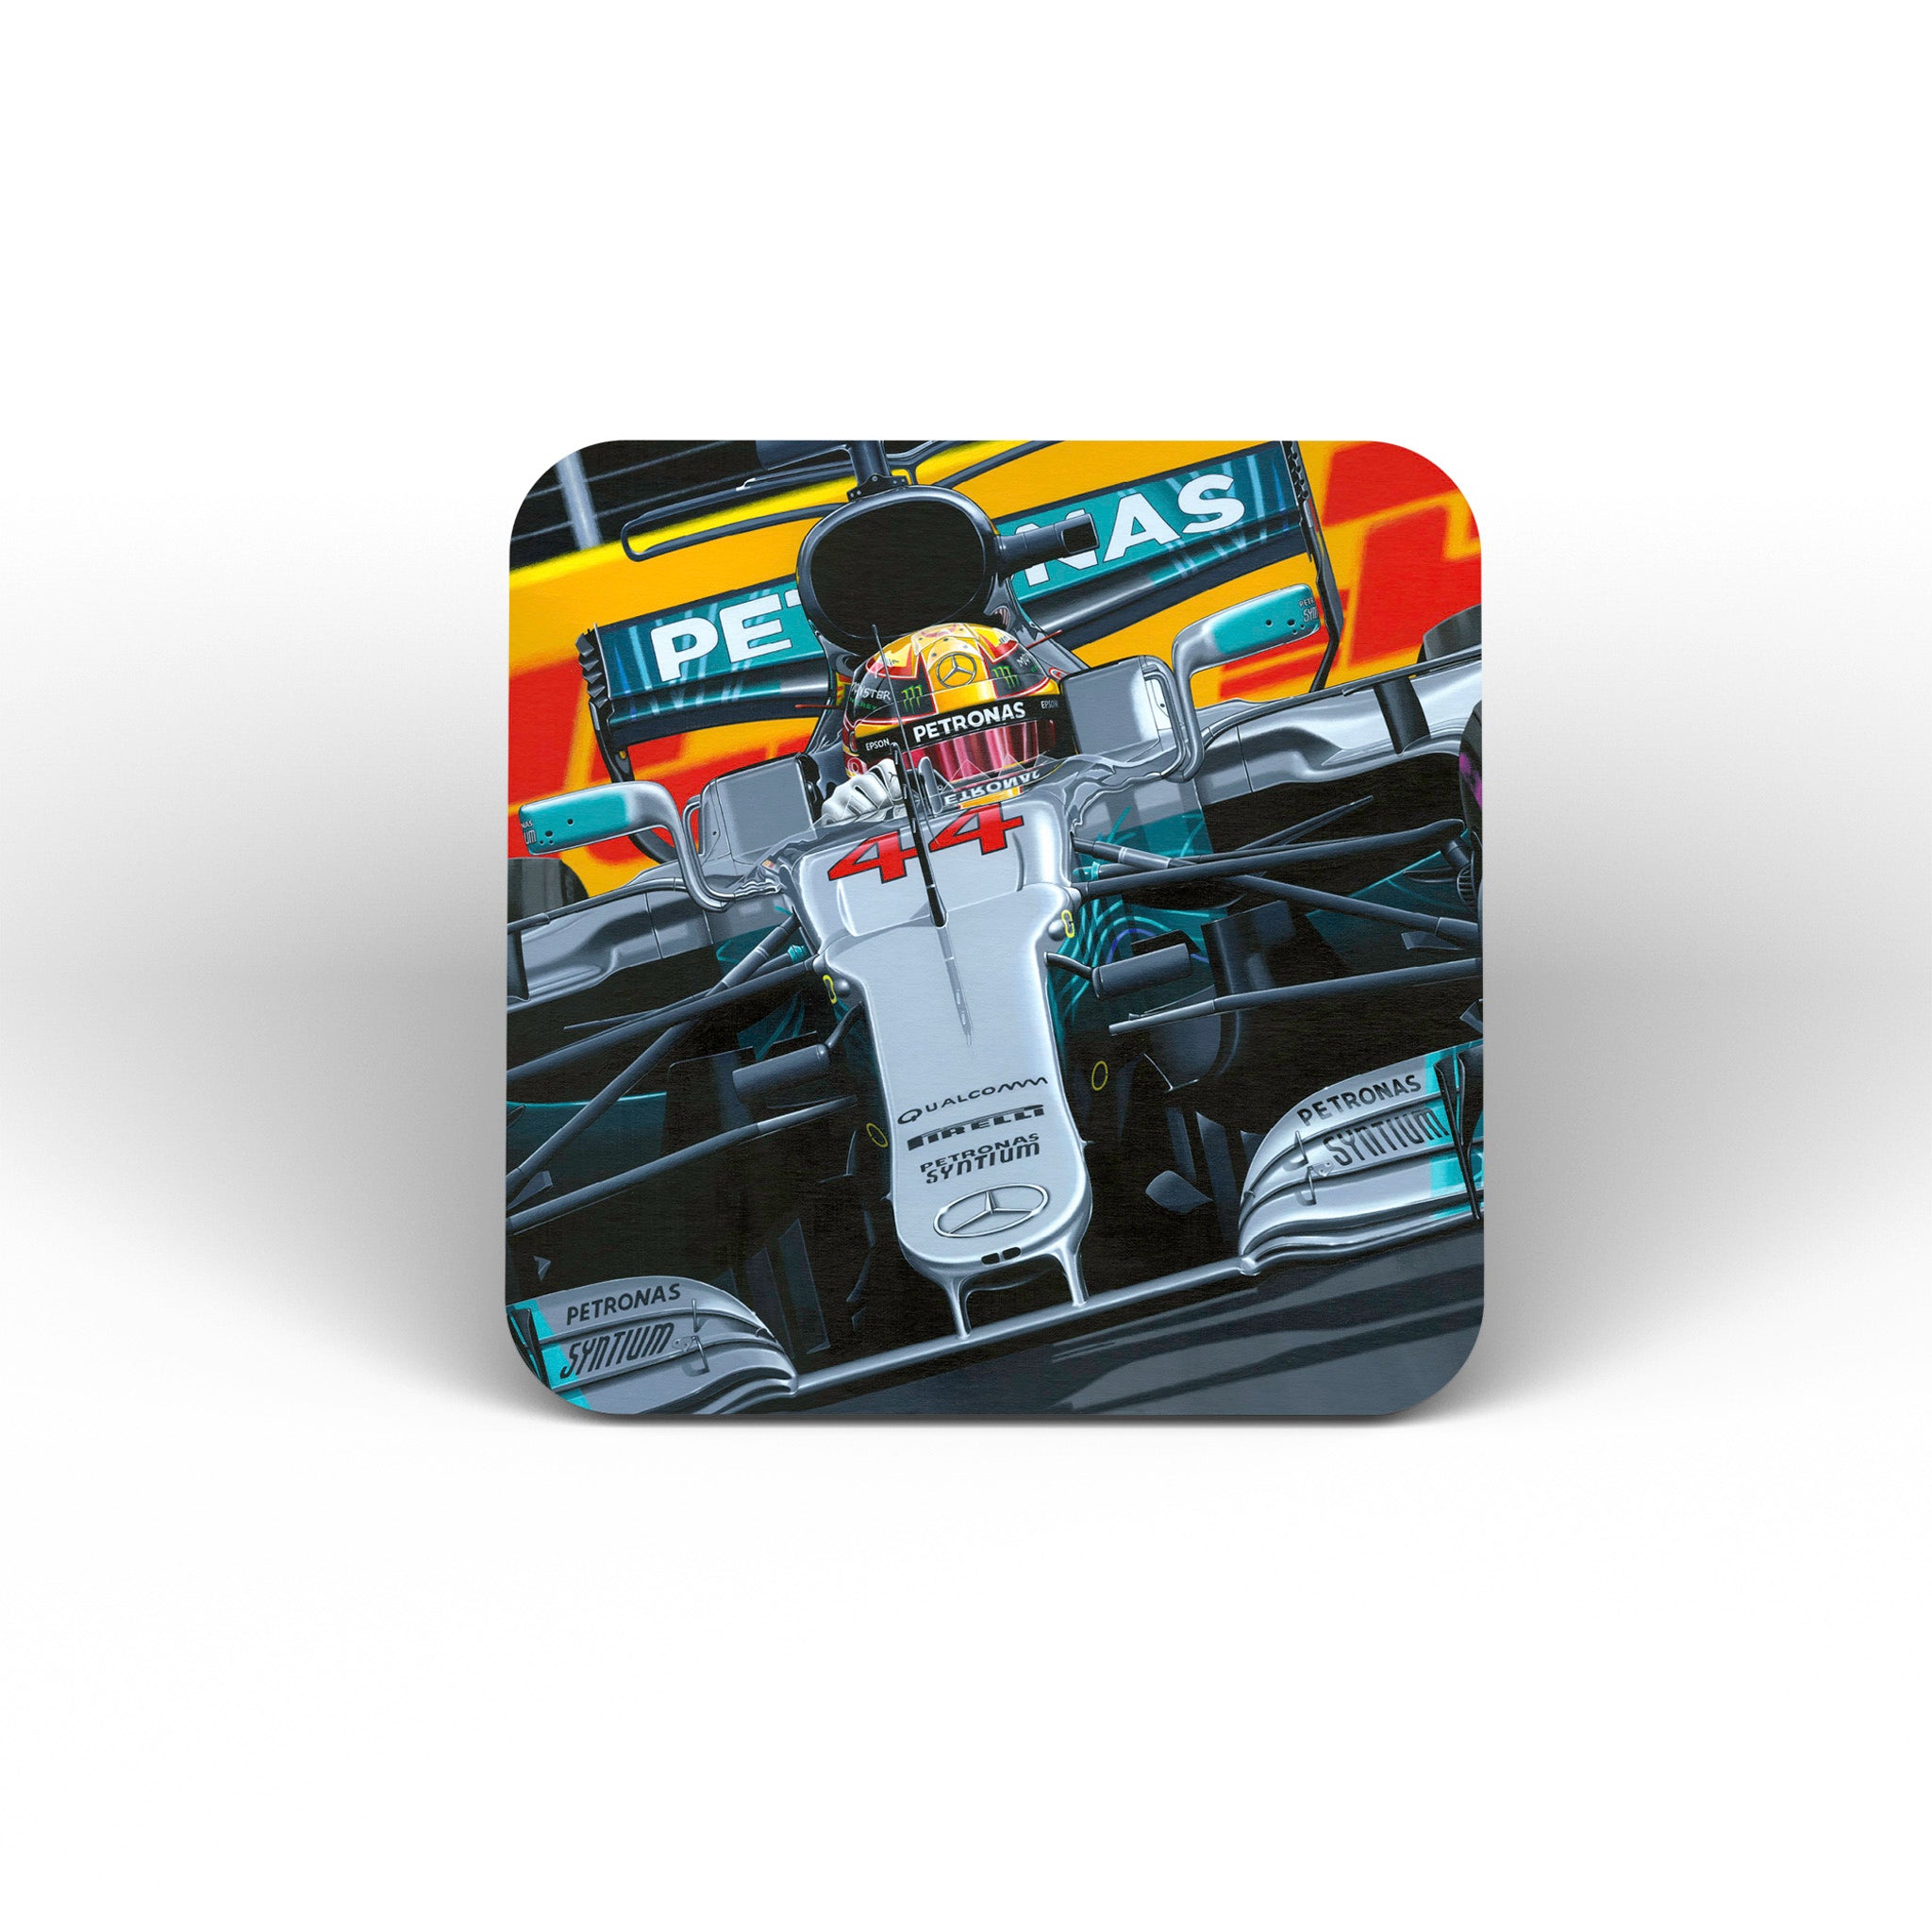 Lewis Lionheart | Lewis Hamilton | Mercedes W08 | Art Mug or Coaster